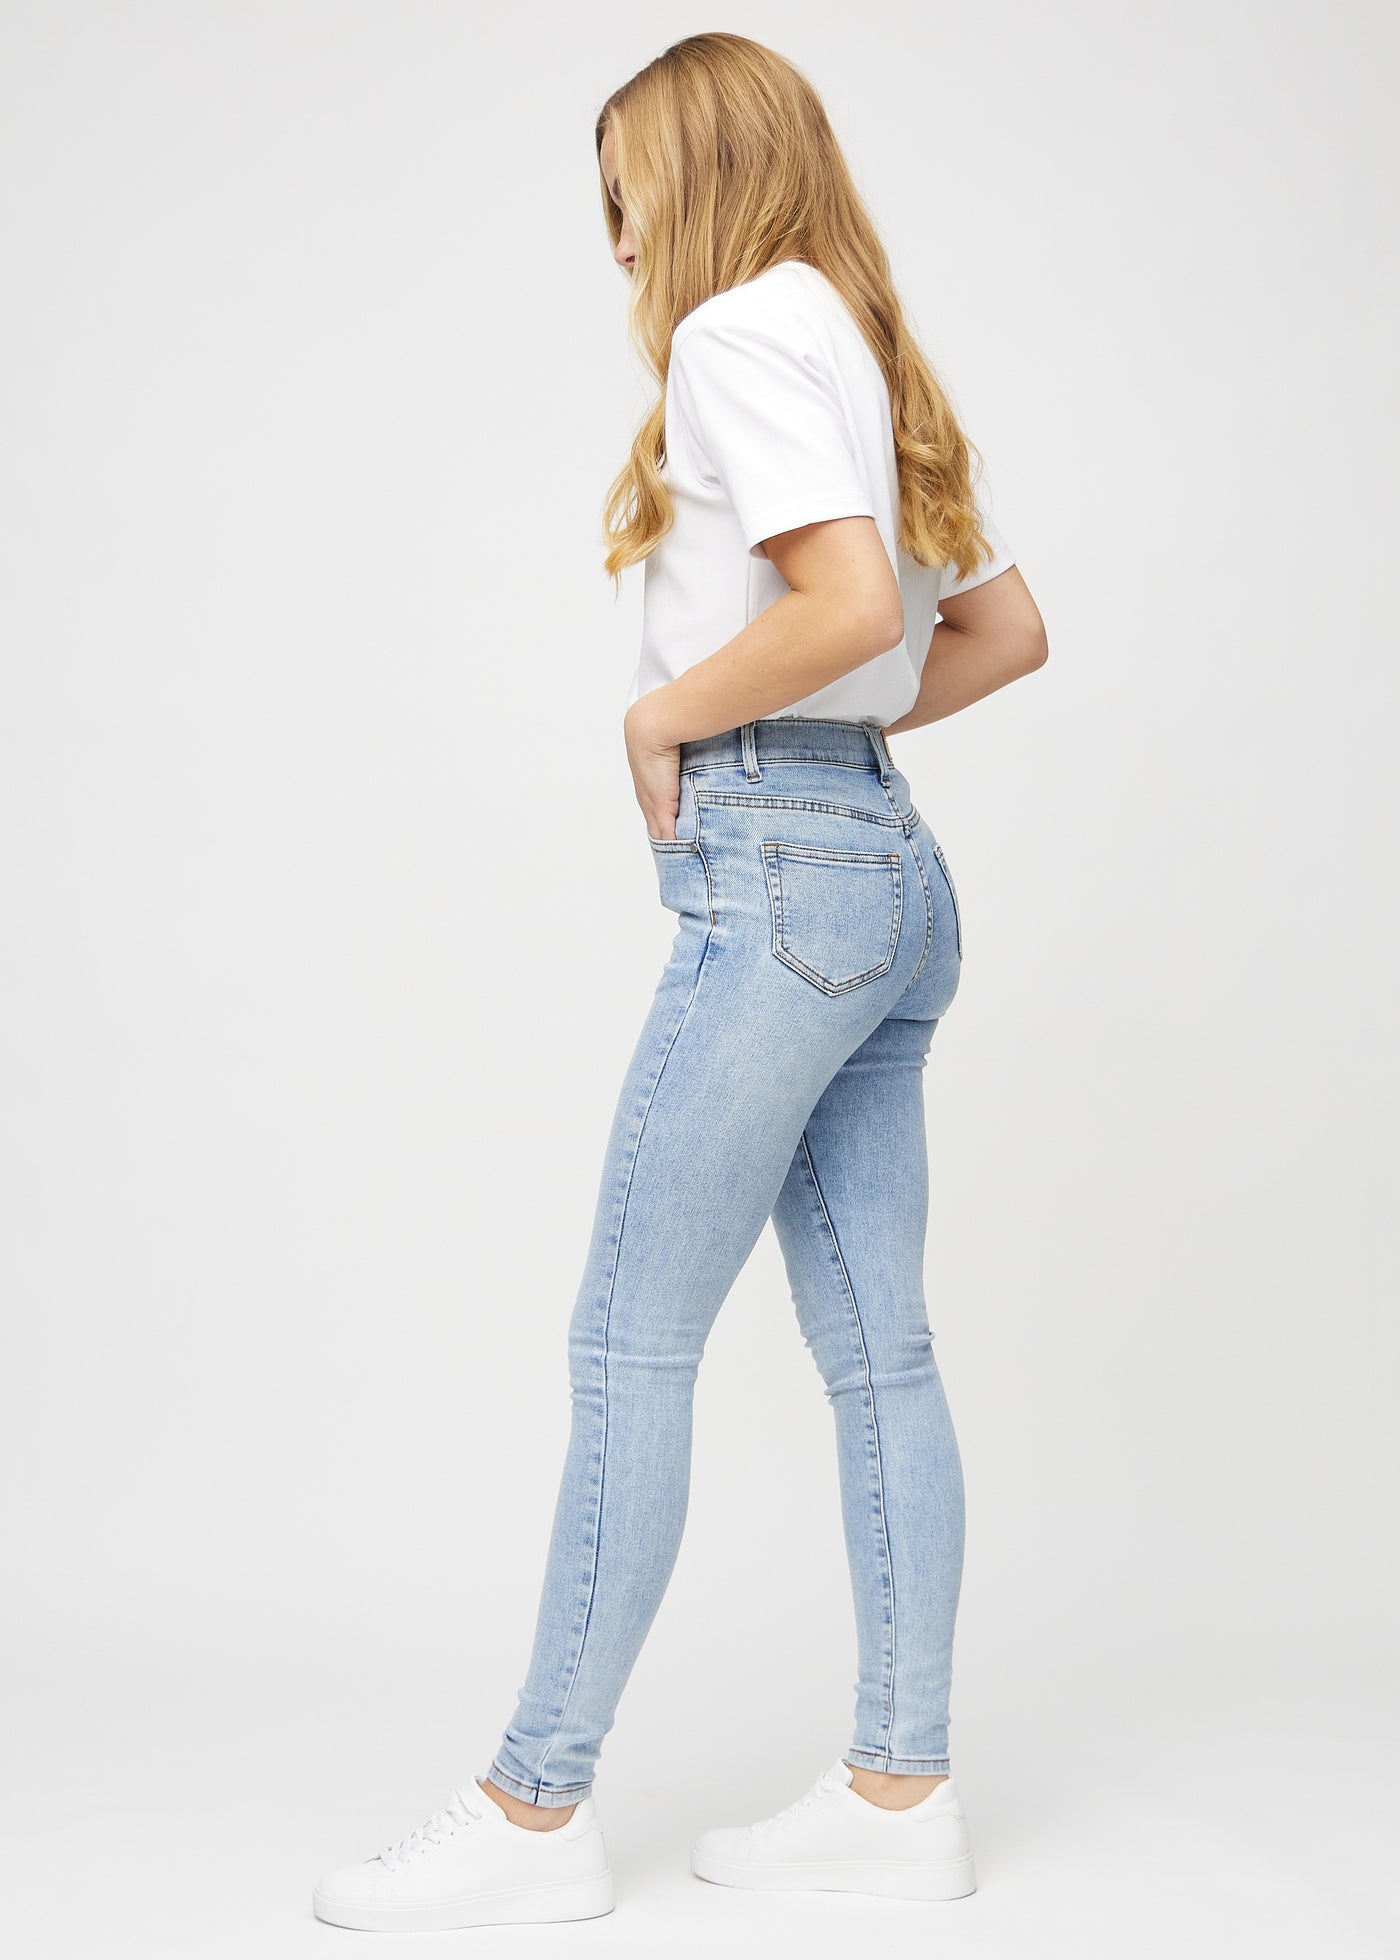 Lys denim skinny jeans set fra siden på model.